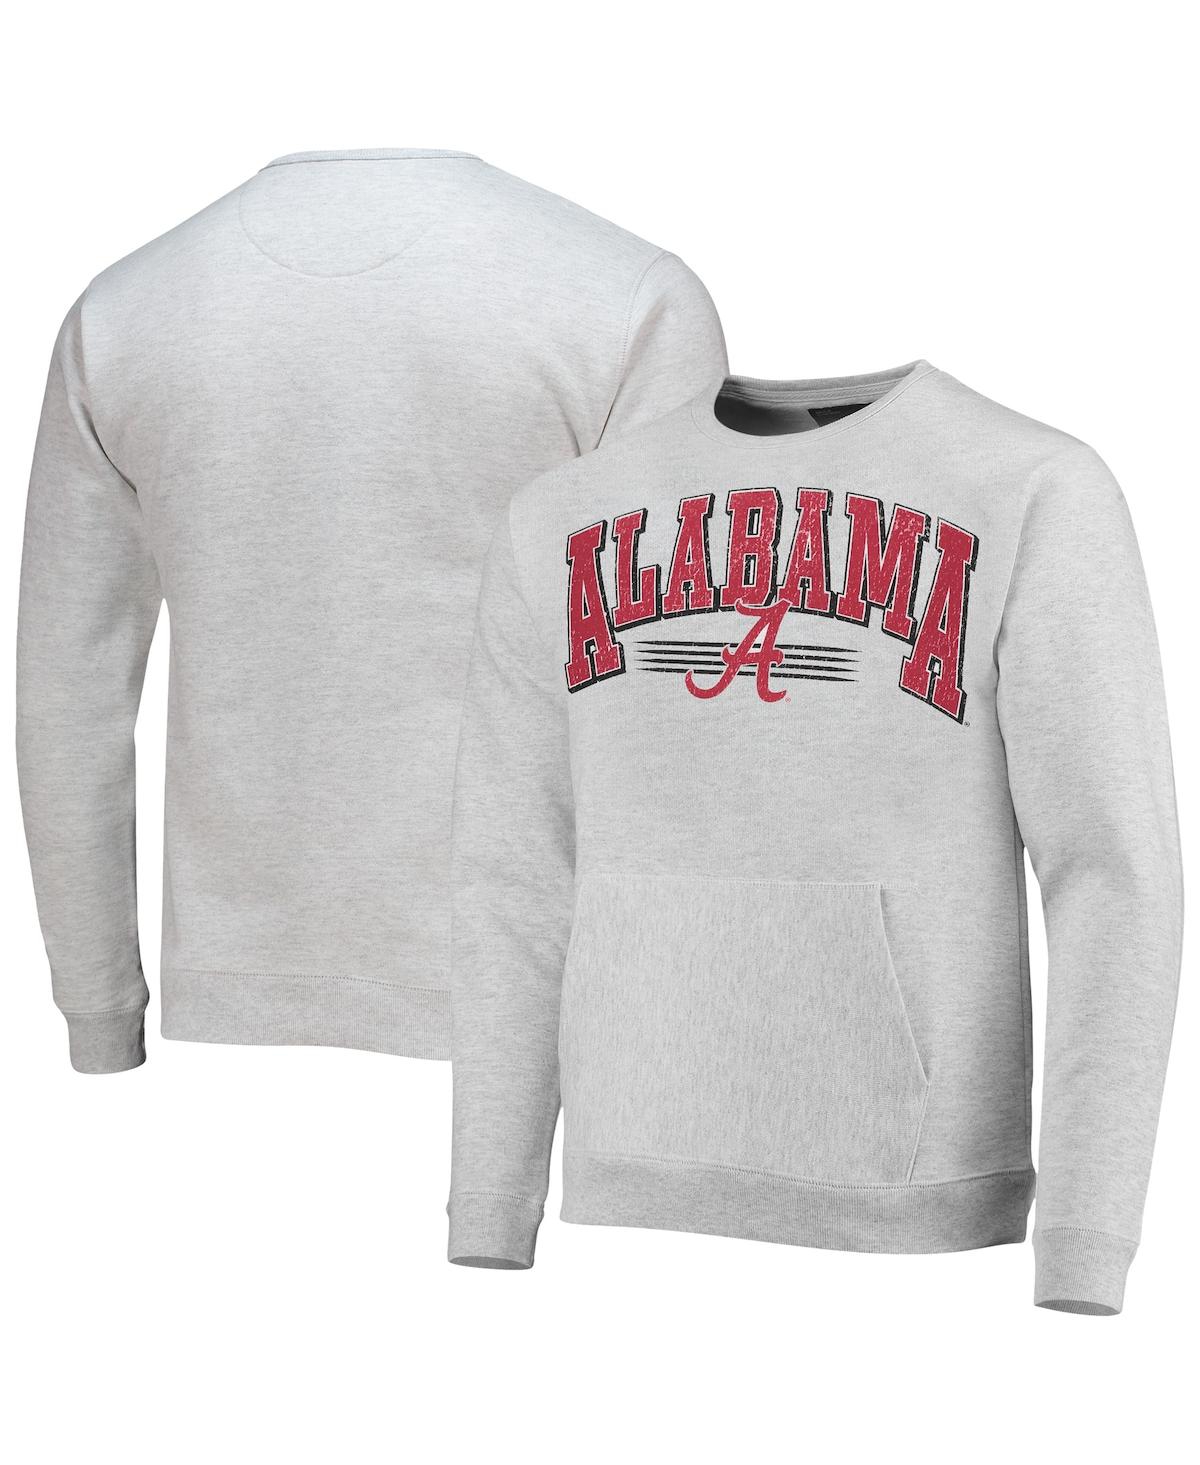 Men's League Collegiate Wear Heather Gray Alabama Crimson Tide Upperclassman Pocket Pullover Sweatshirt - Heathered Gray